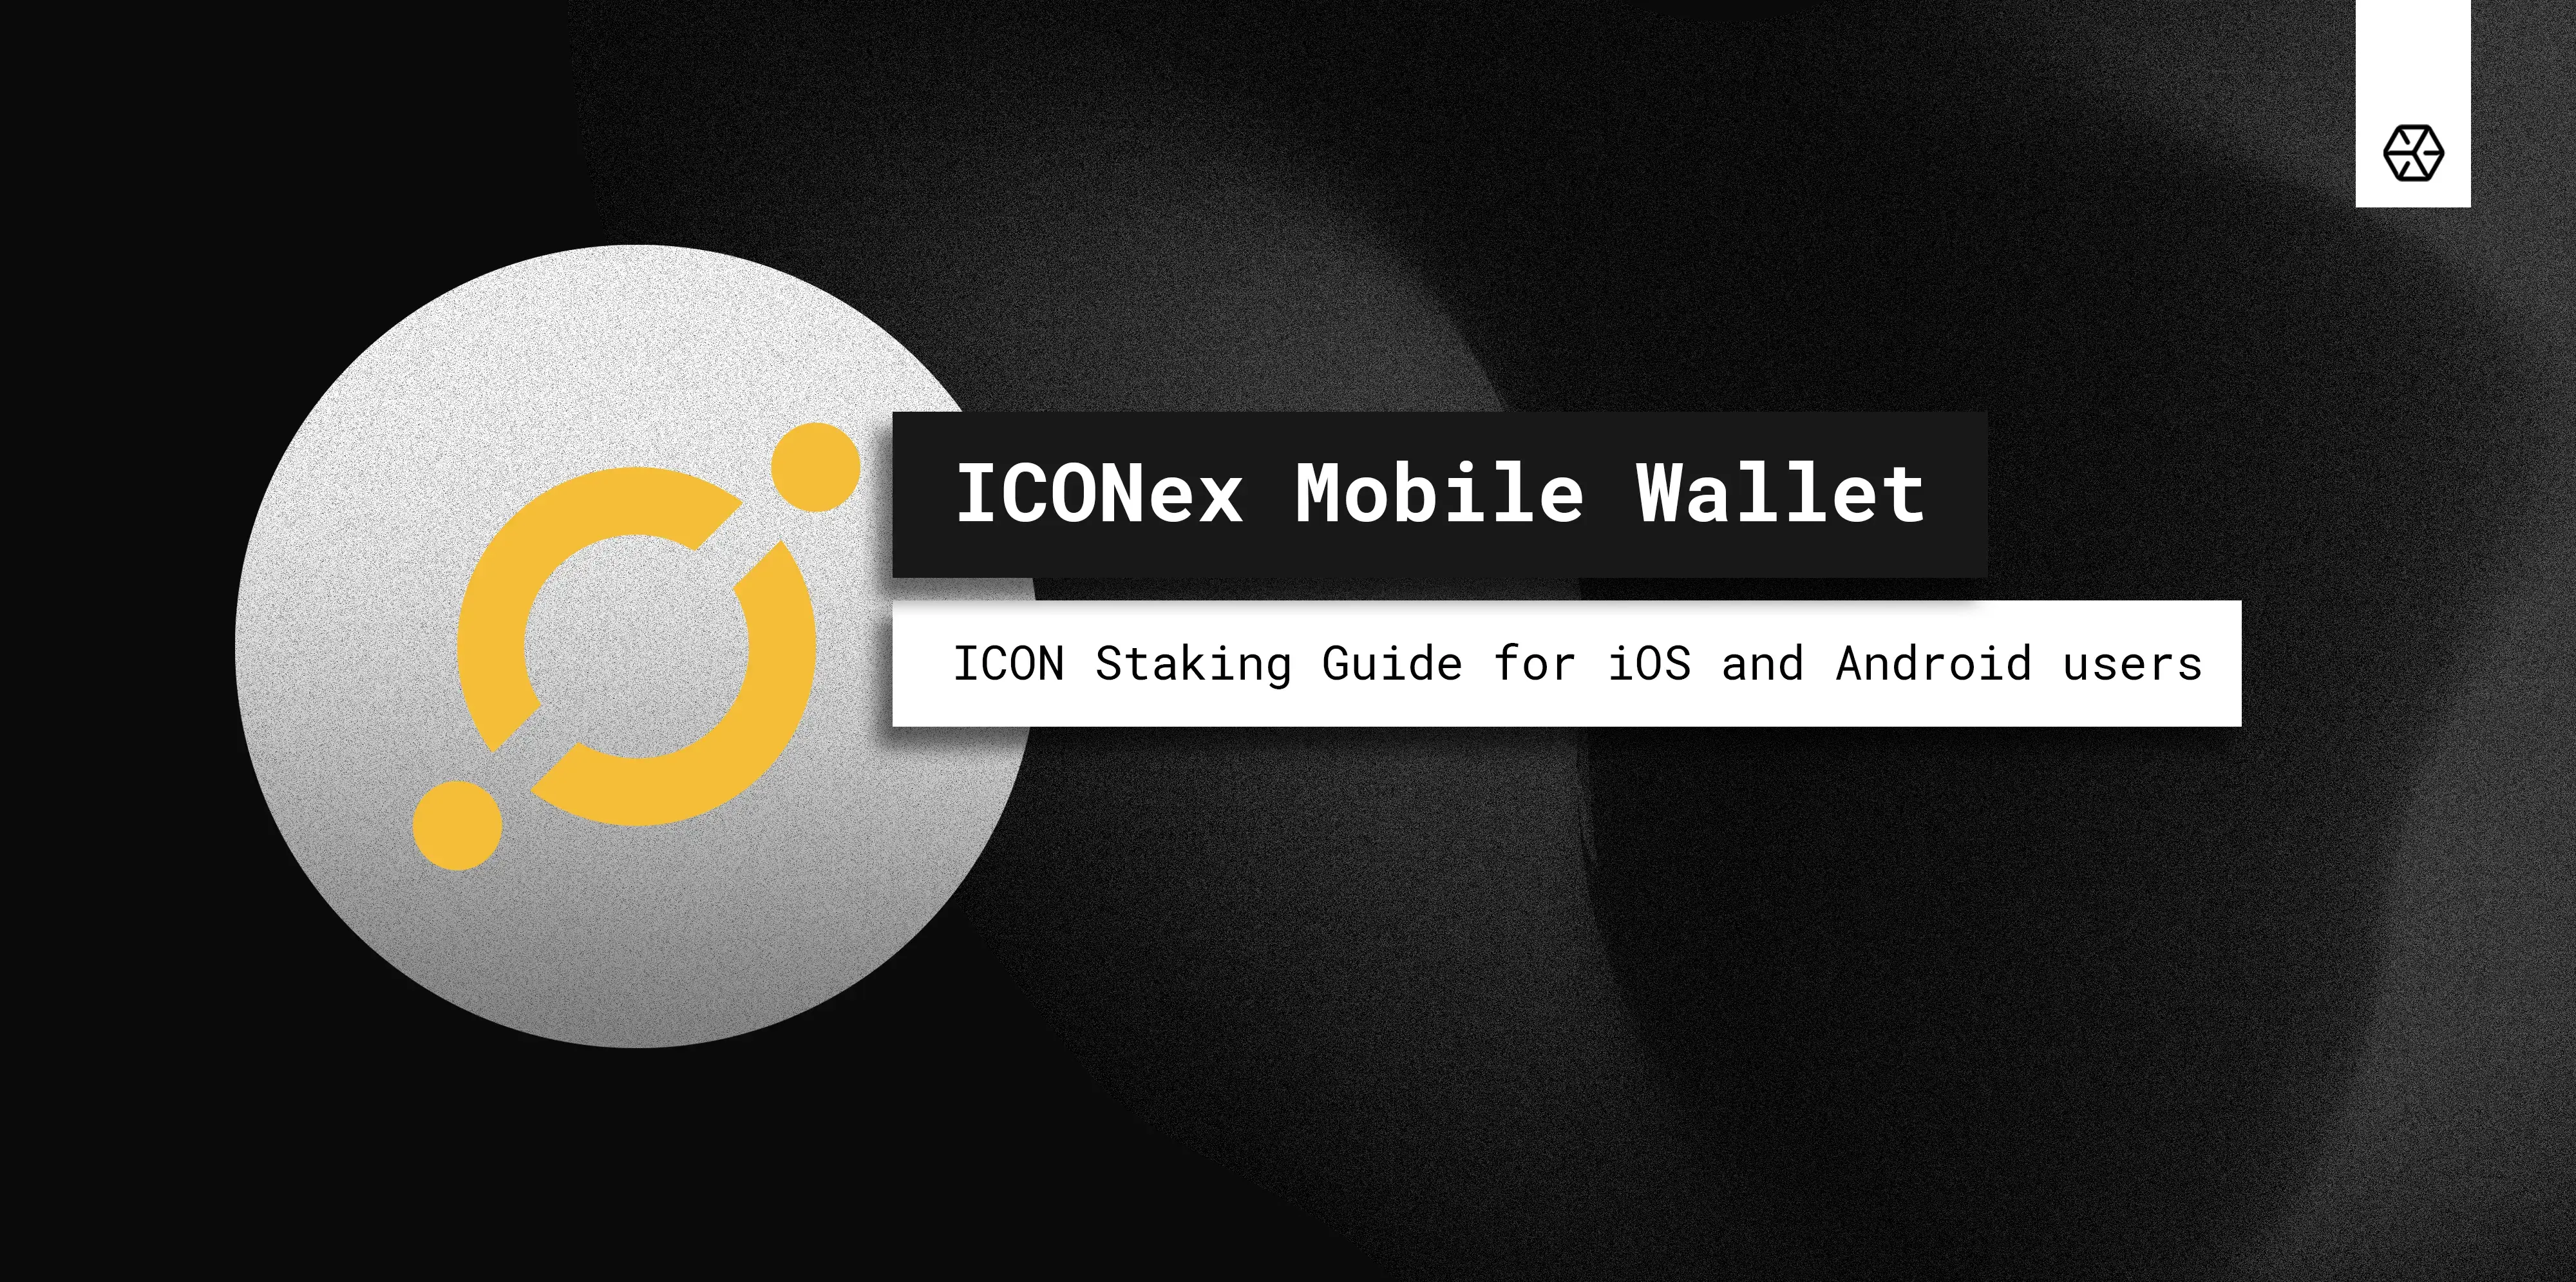 ICON Staking Guide Through ICONex Mobile Wallet